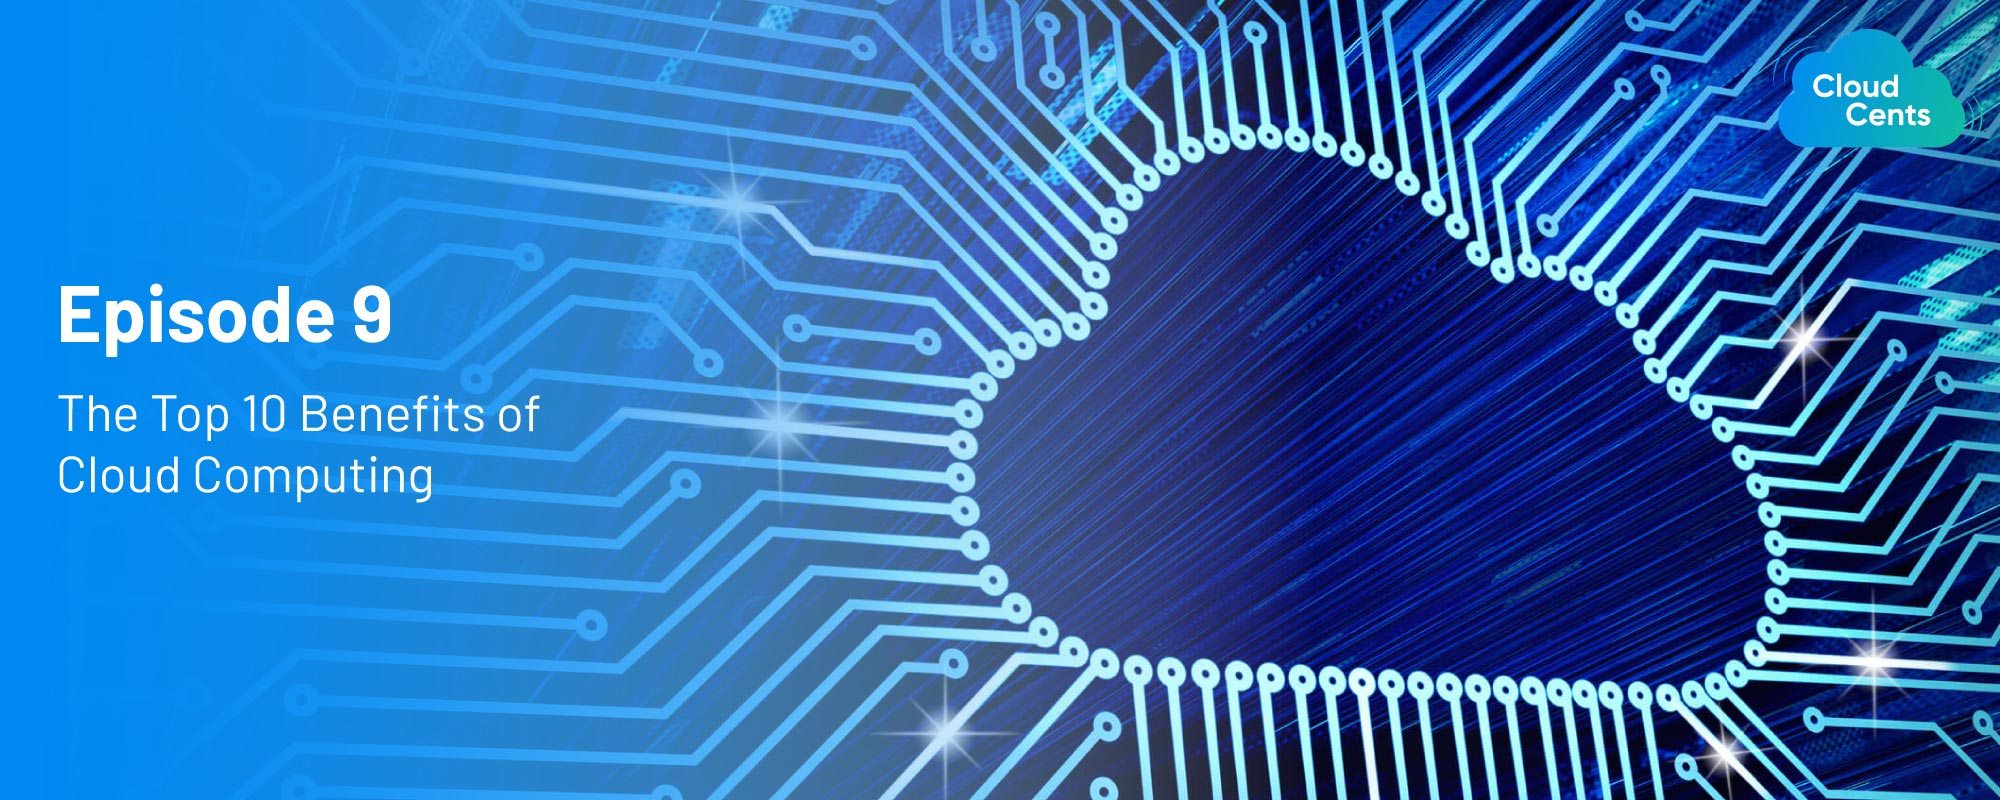 CloudCents Episode 9 - The Top 10 Benefits of Cloud Computing